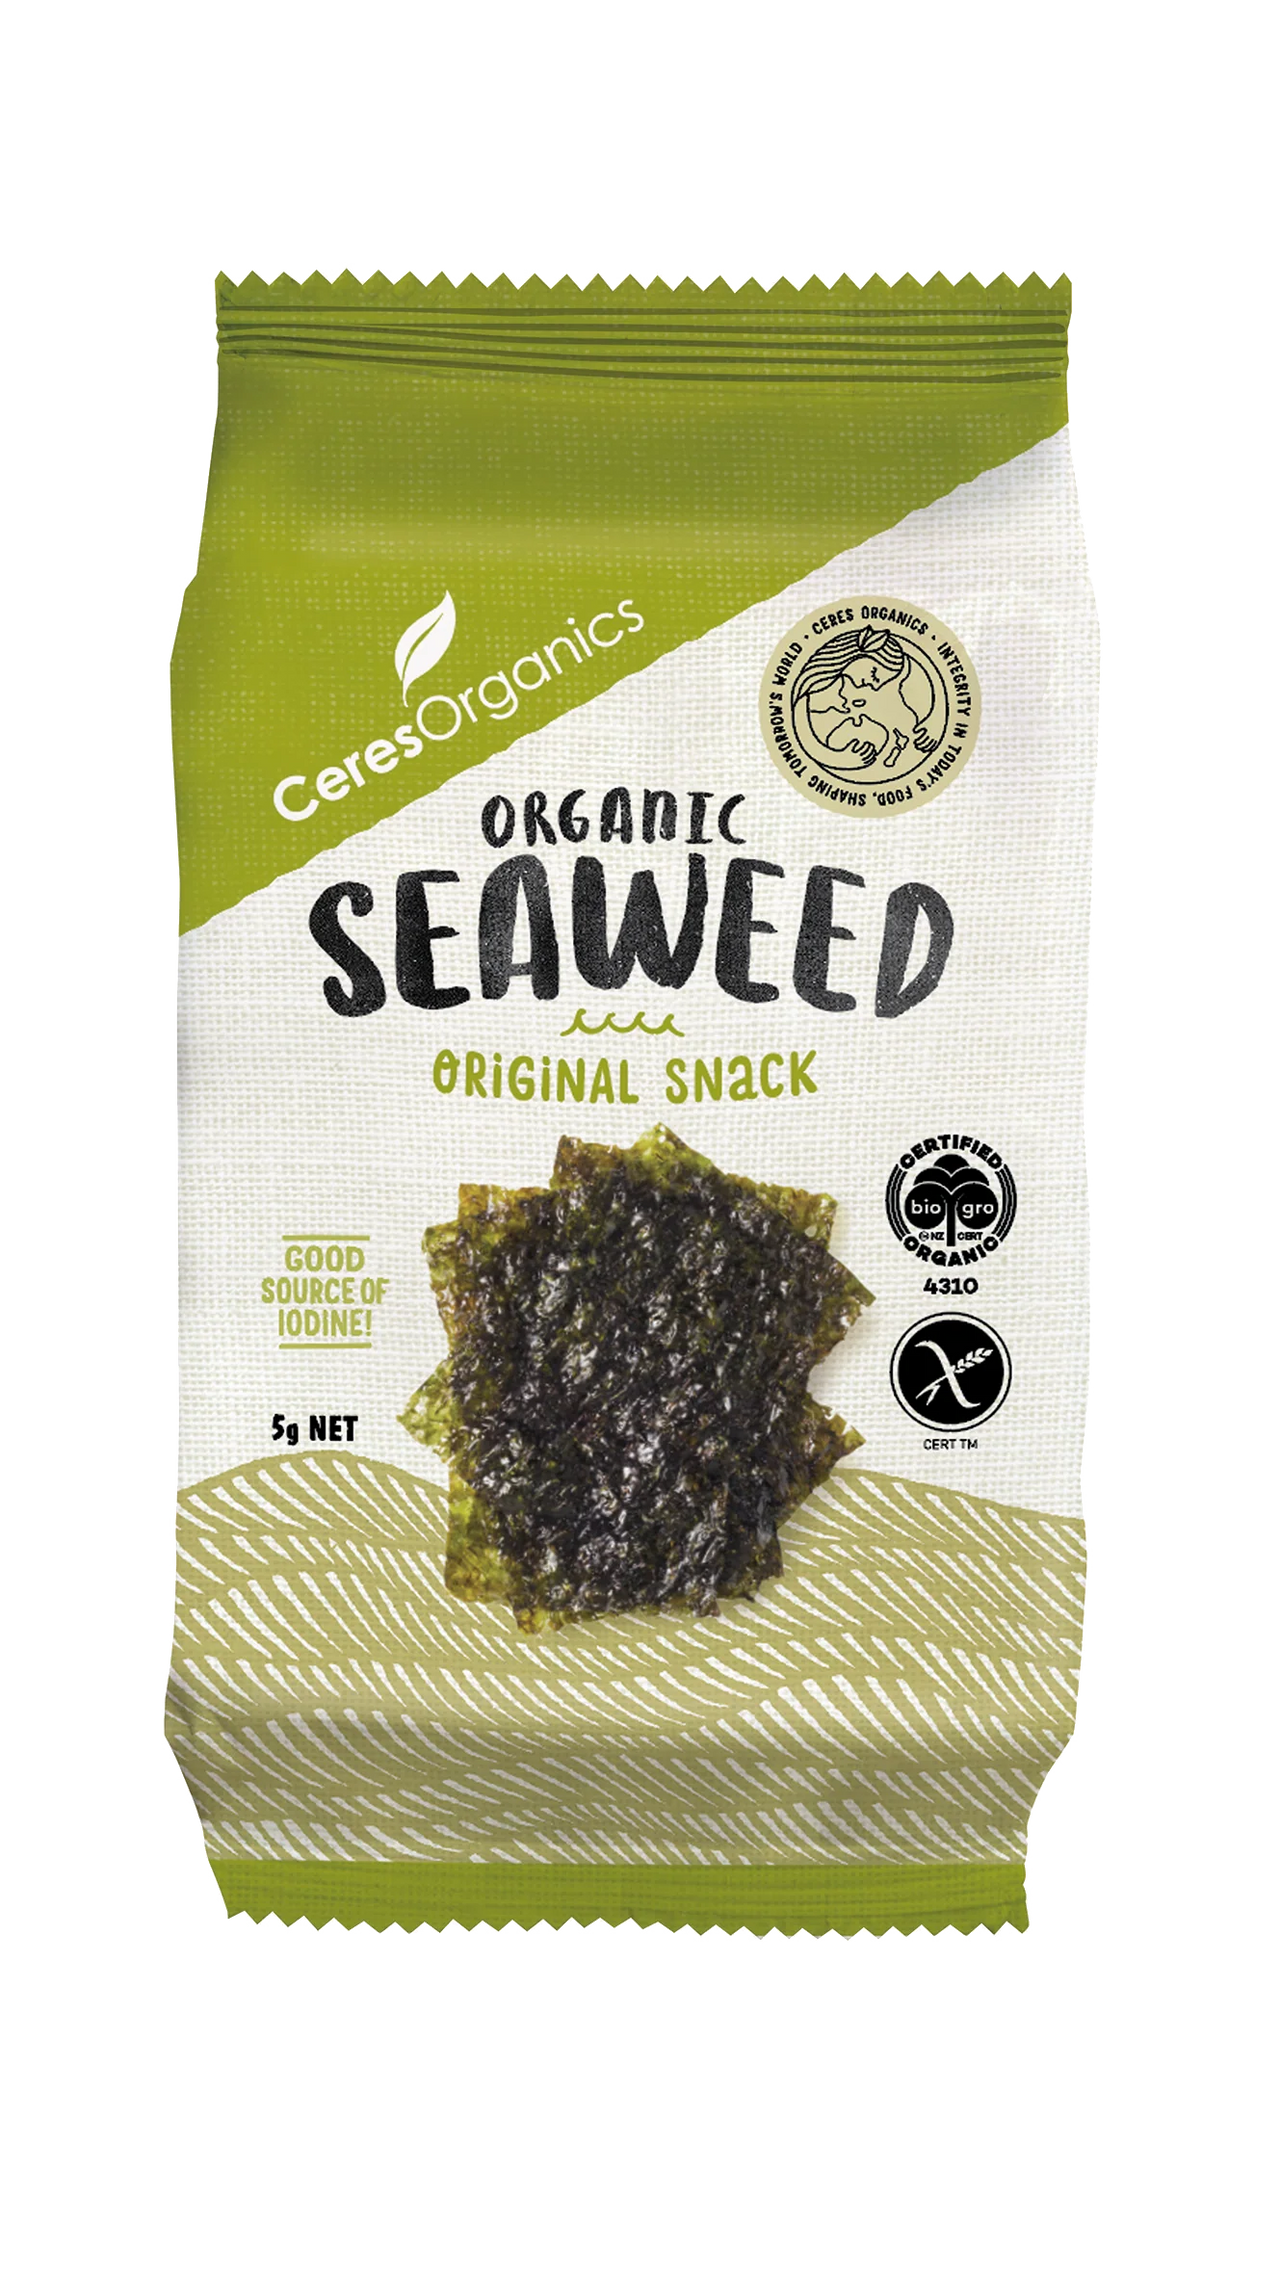 Ceres - Organic Seaweed [Original] - [5g]